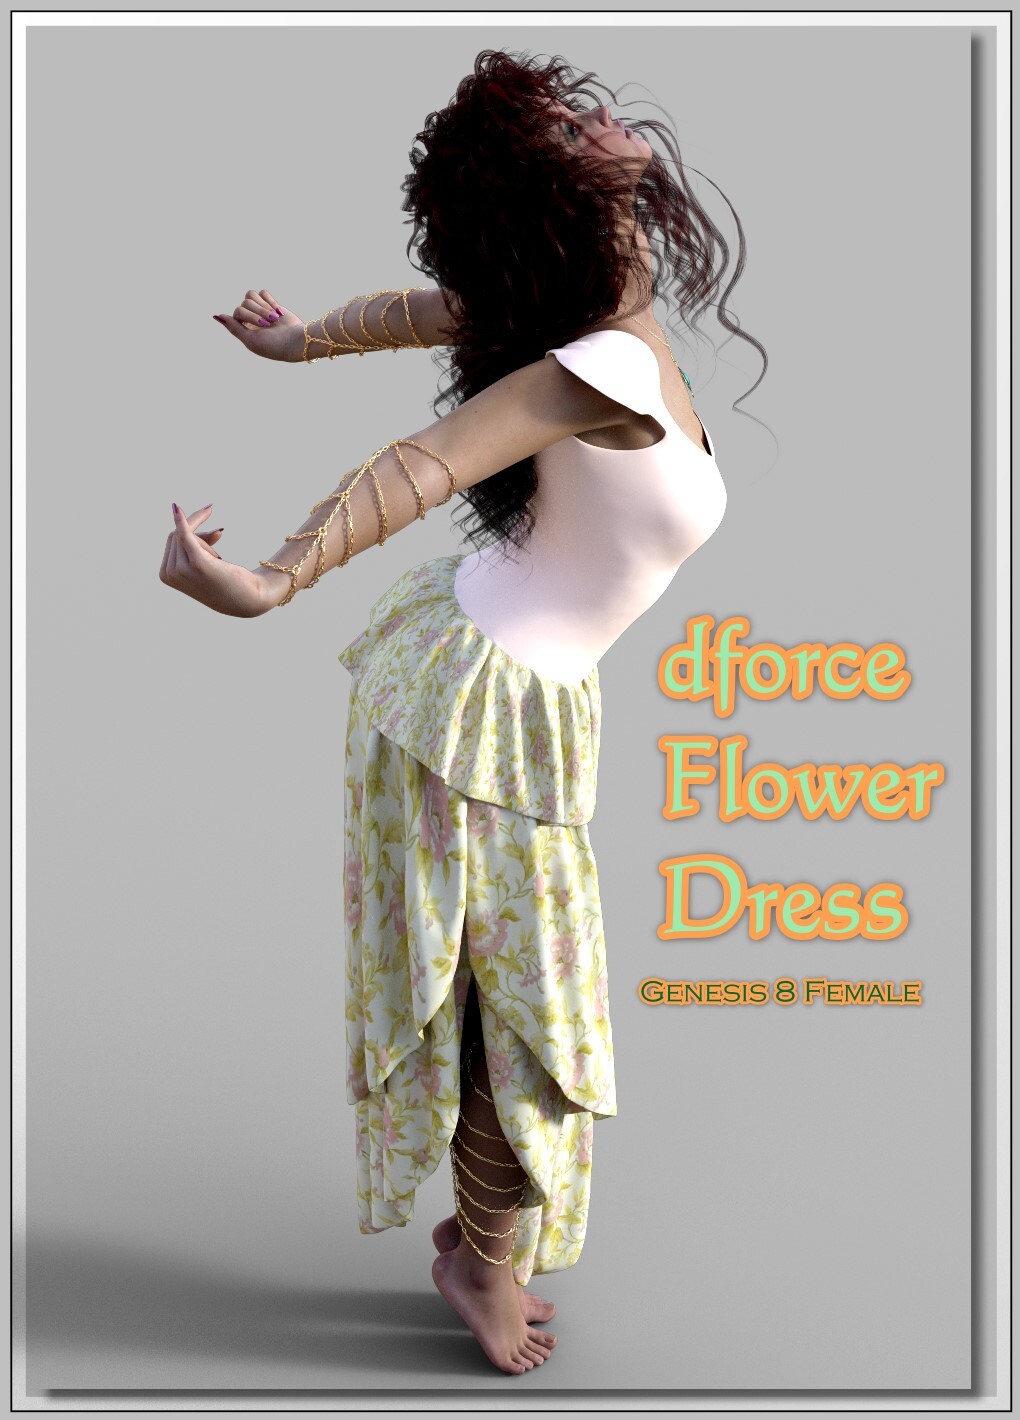 dforce-Flower-Dress G8F by: LUNA3D, 3D Models by Daz 3D